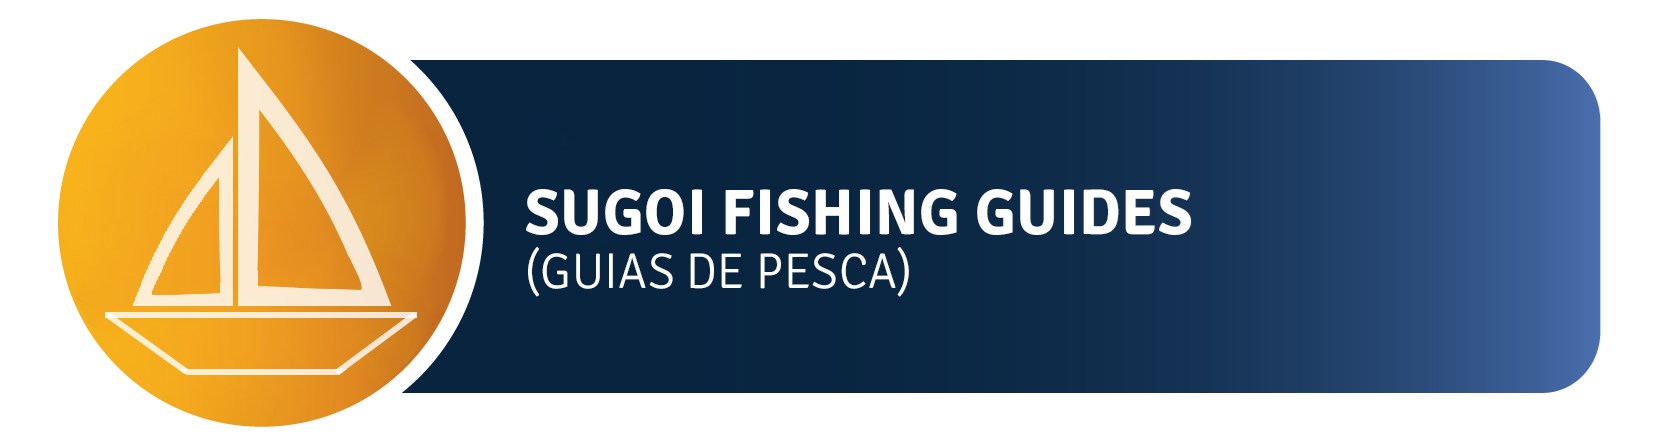 SUGOI Fishing Guide